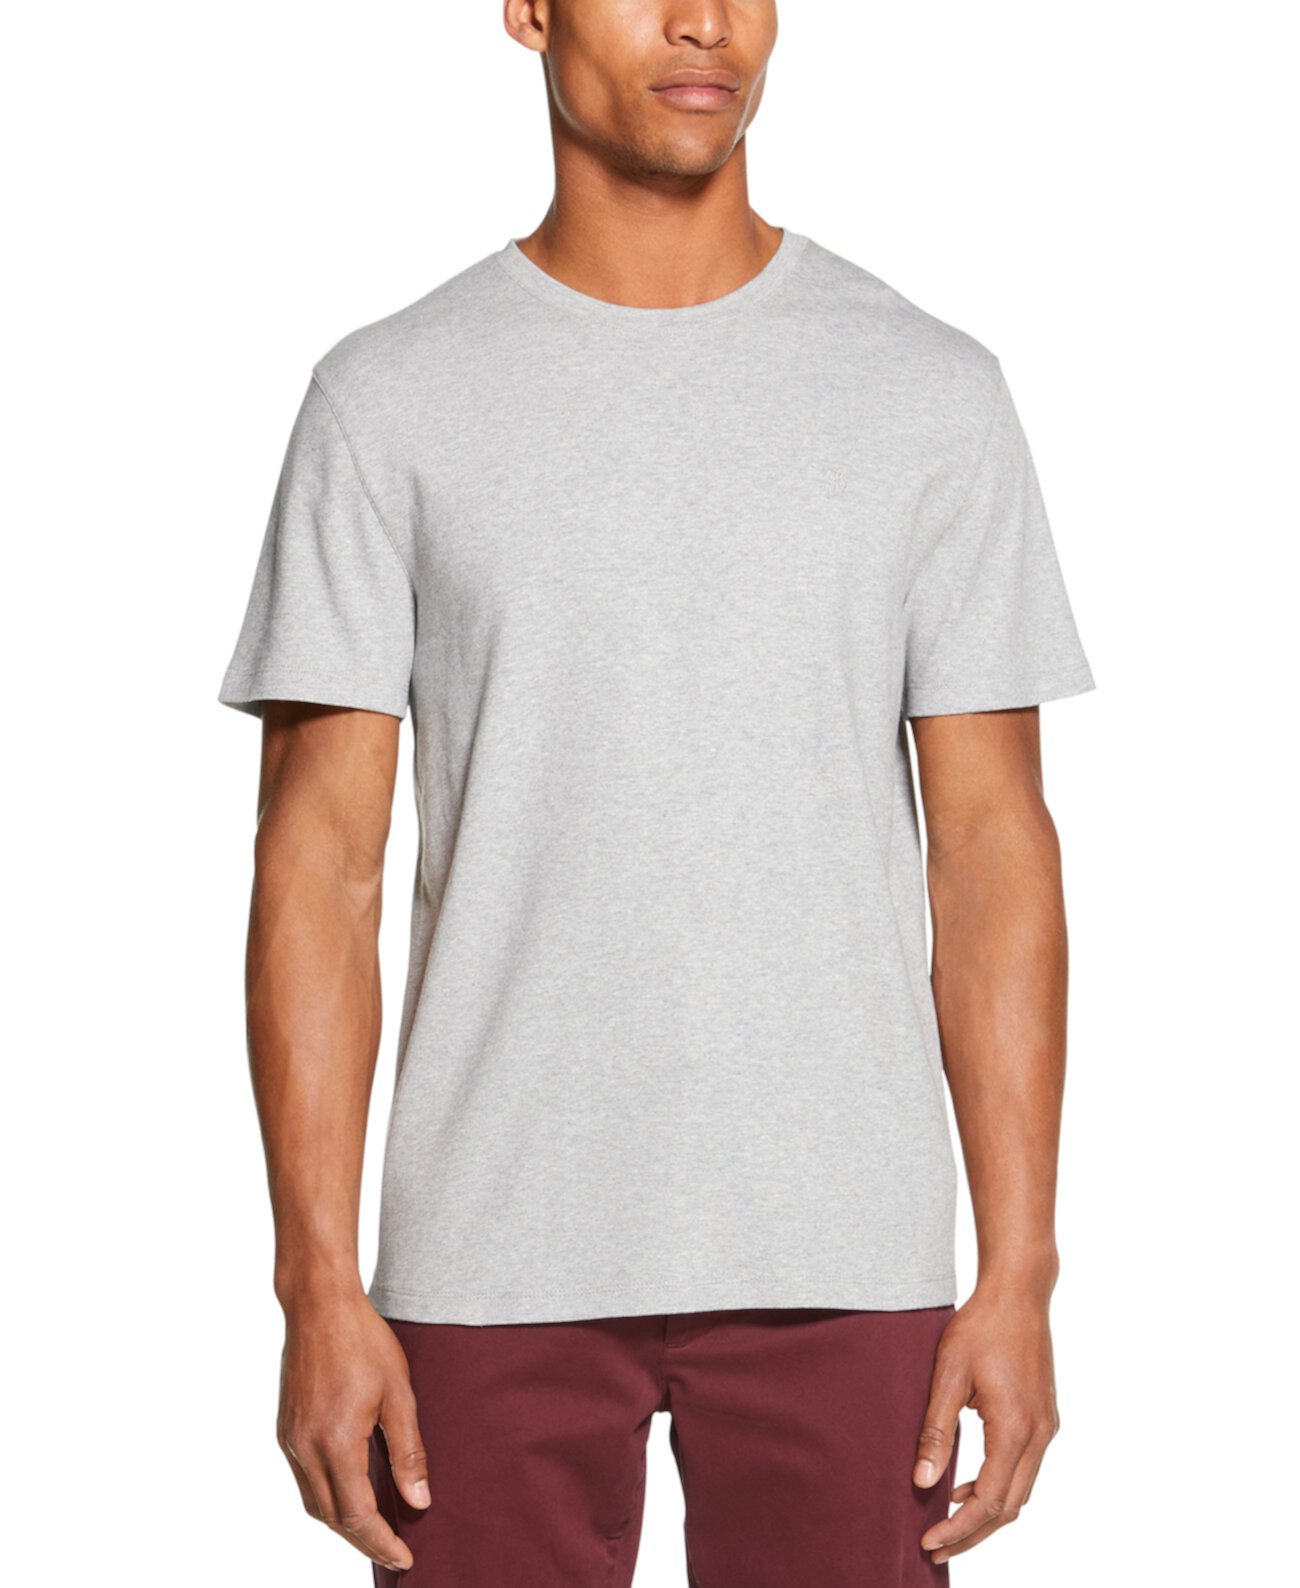 Мужская футболка Supima с круглым вырезом DKNY